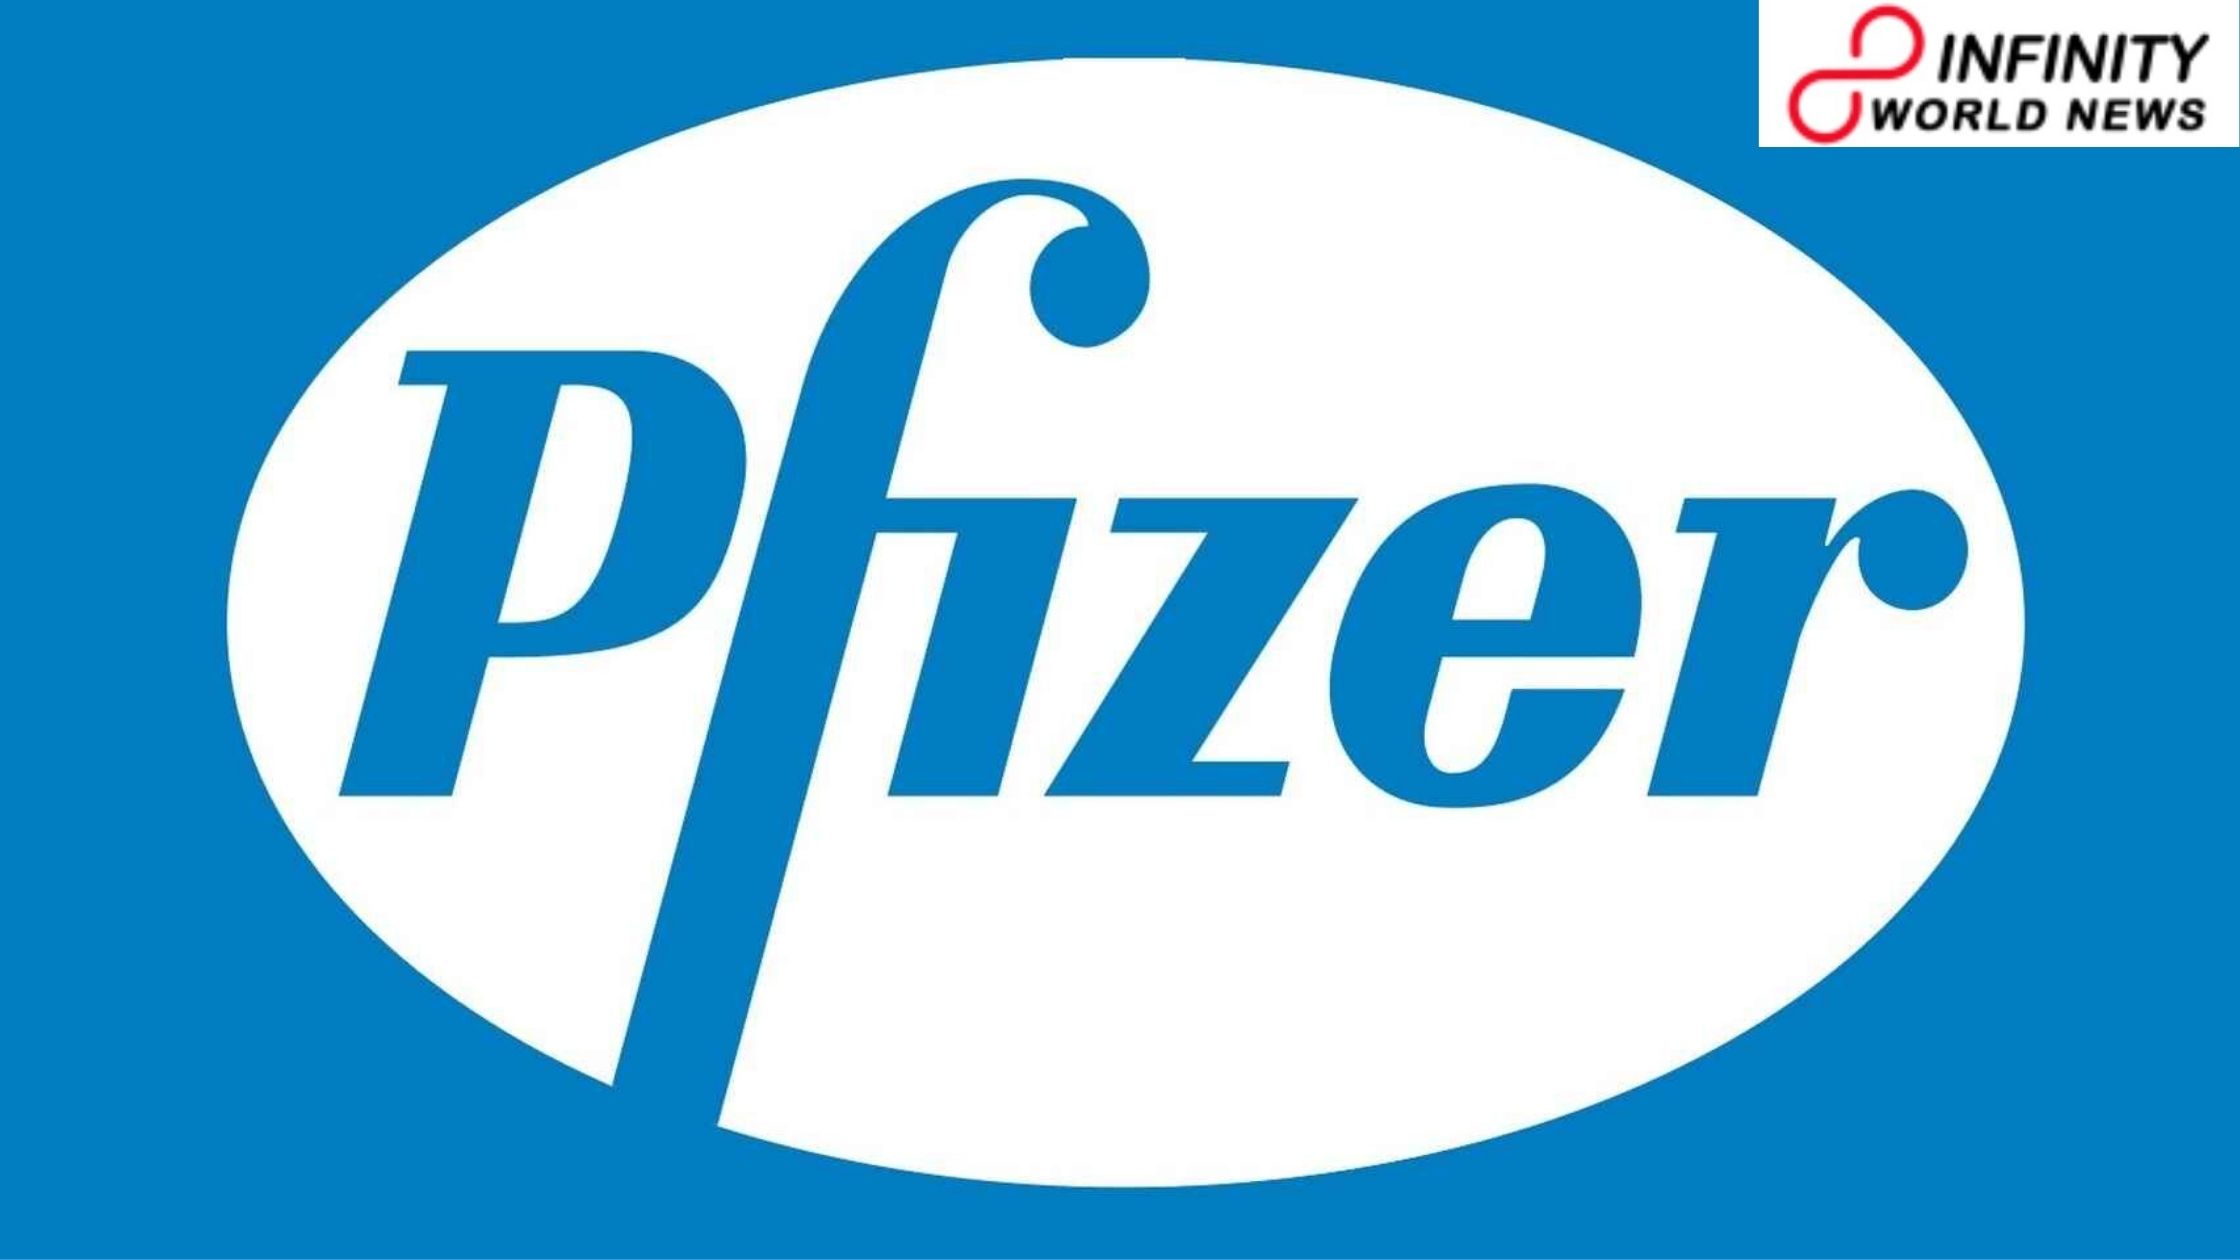 "Seriously Politicized": Pfizer Chief On Covid Vaccine Development